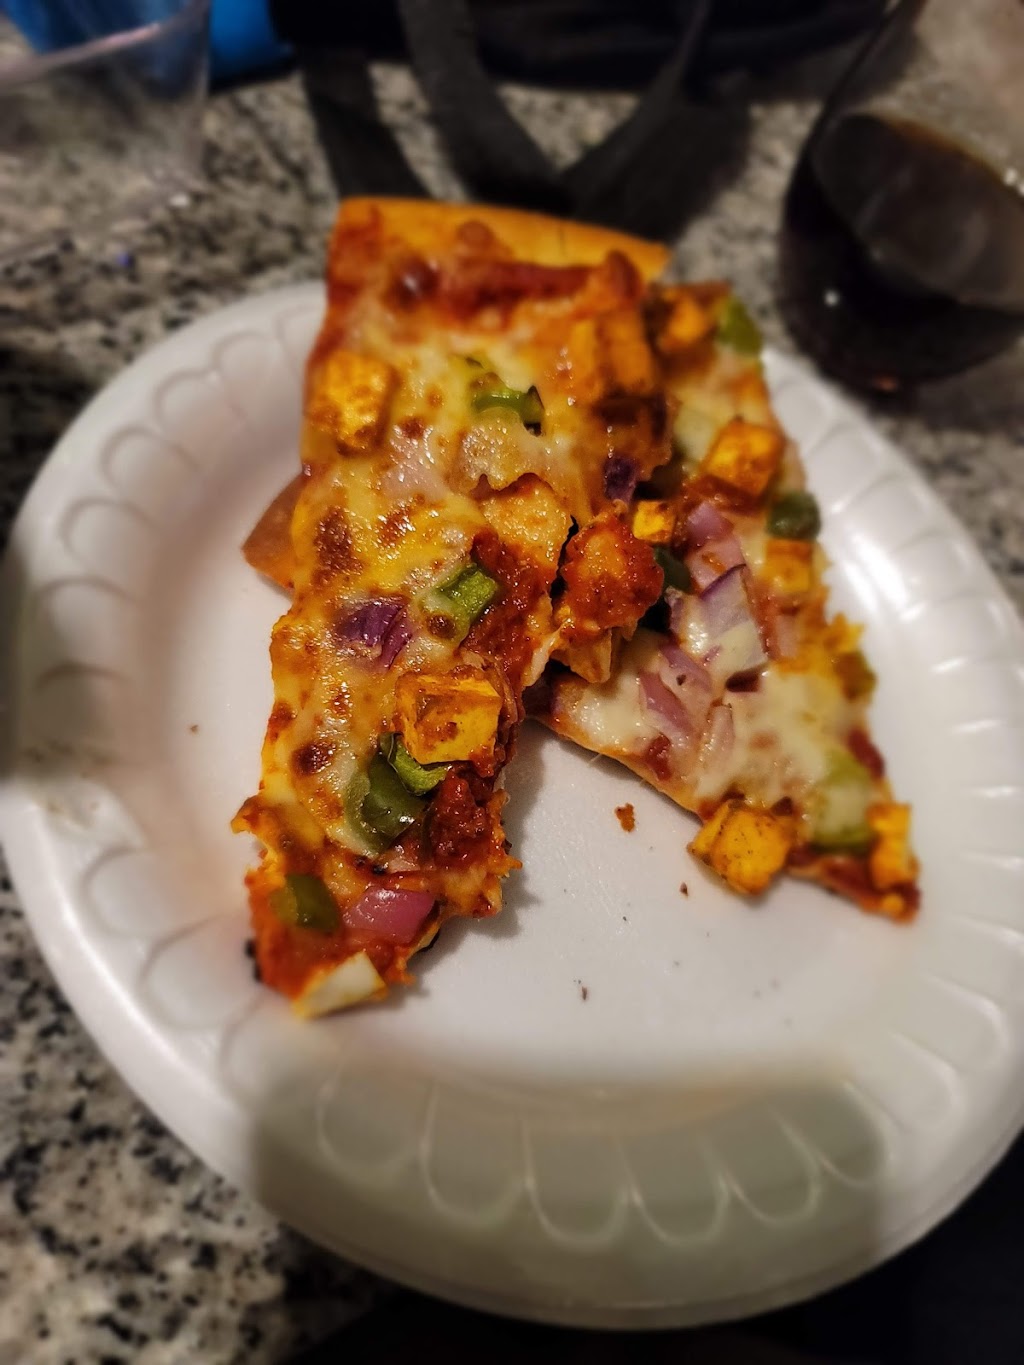 Jimmy Tomato’s / Bombay Curry Pizza | 123 E Main St, Denville, NJ 07834 | Phone: (973) 627-2453